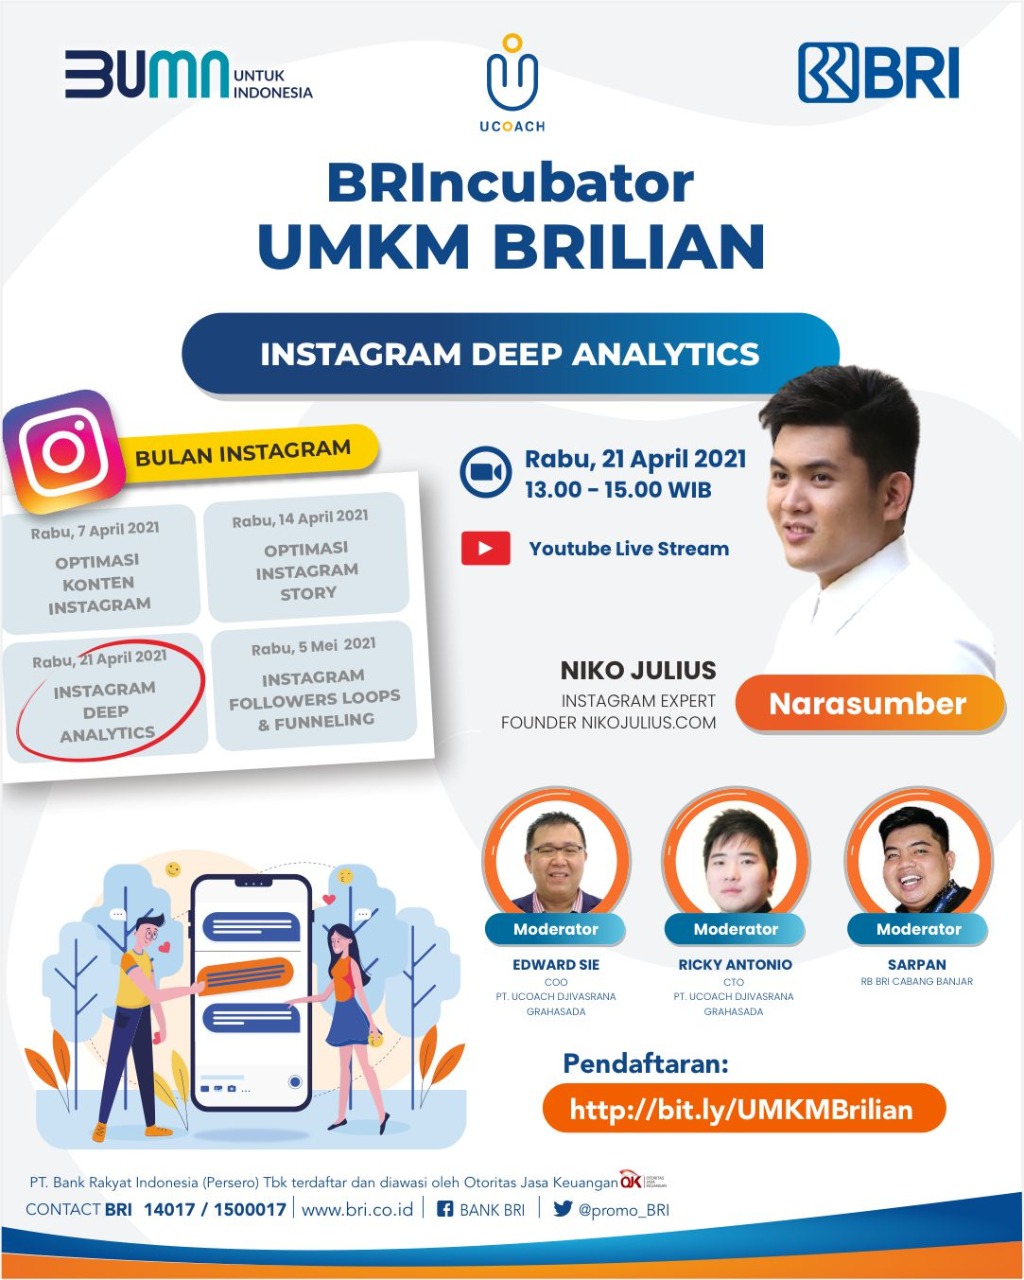 Bulan Instagram - Instagram Deep Analytics BUMN BRI